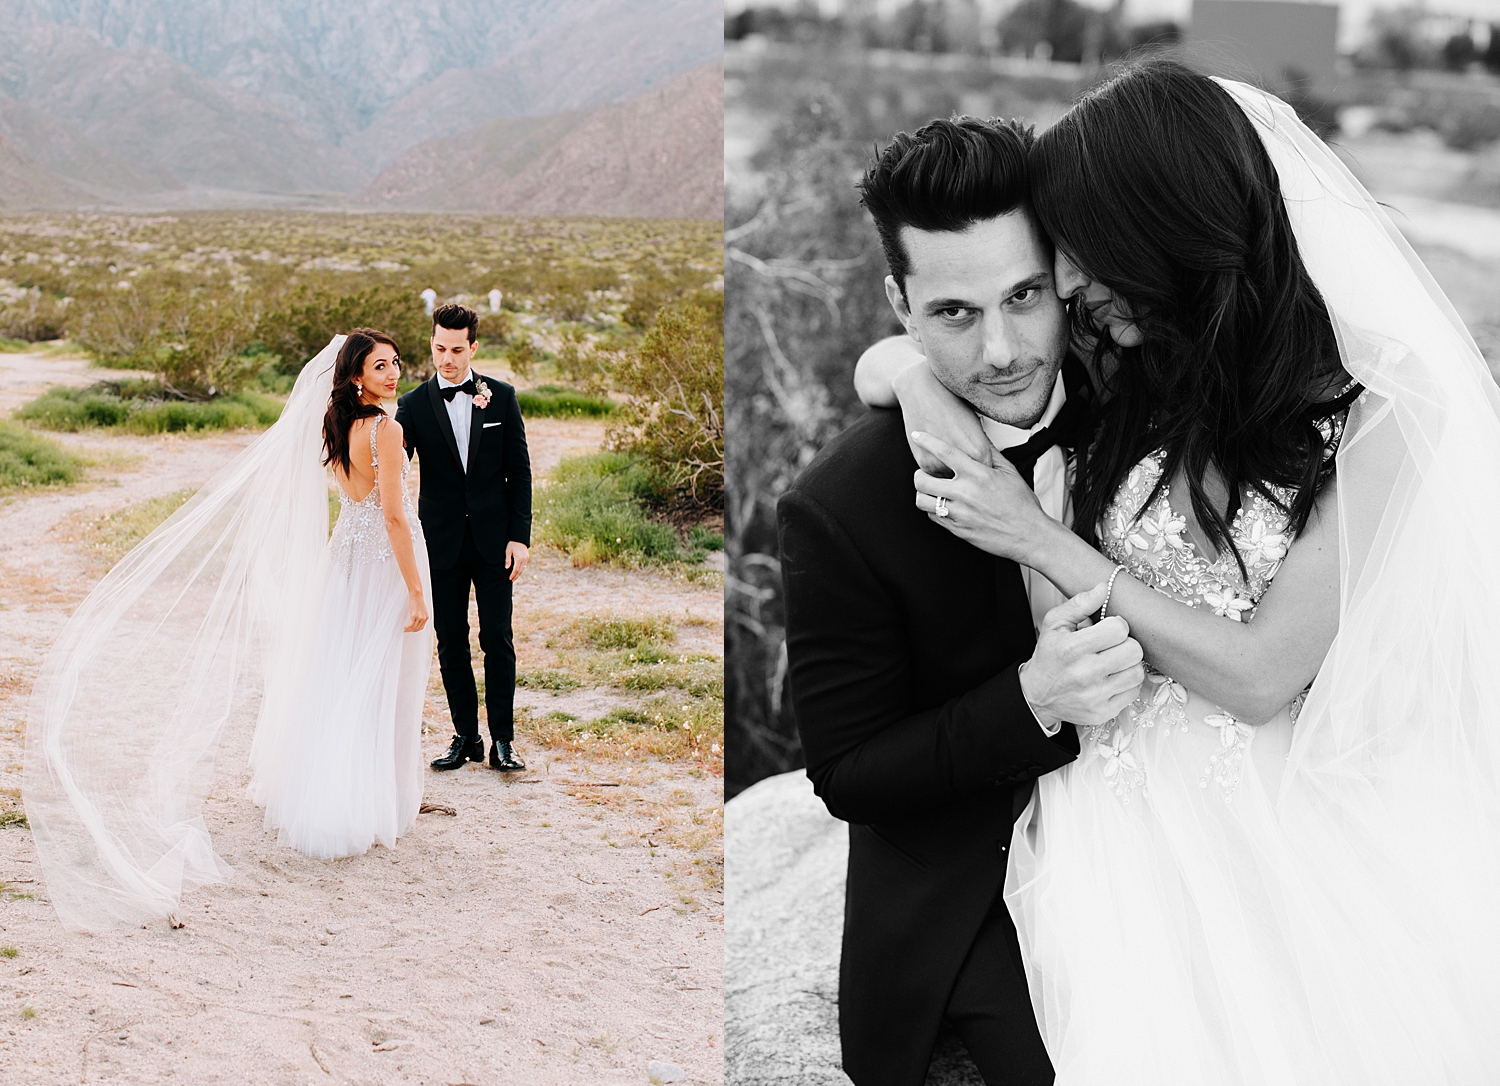 Desert wedding photos in Palm Springs